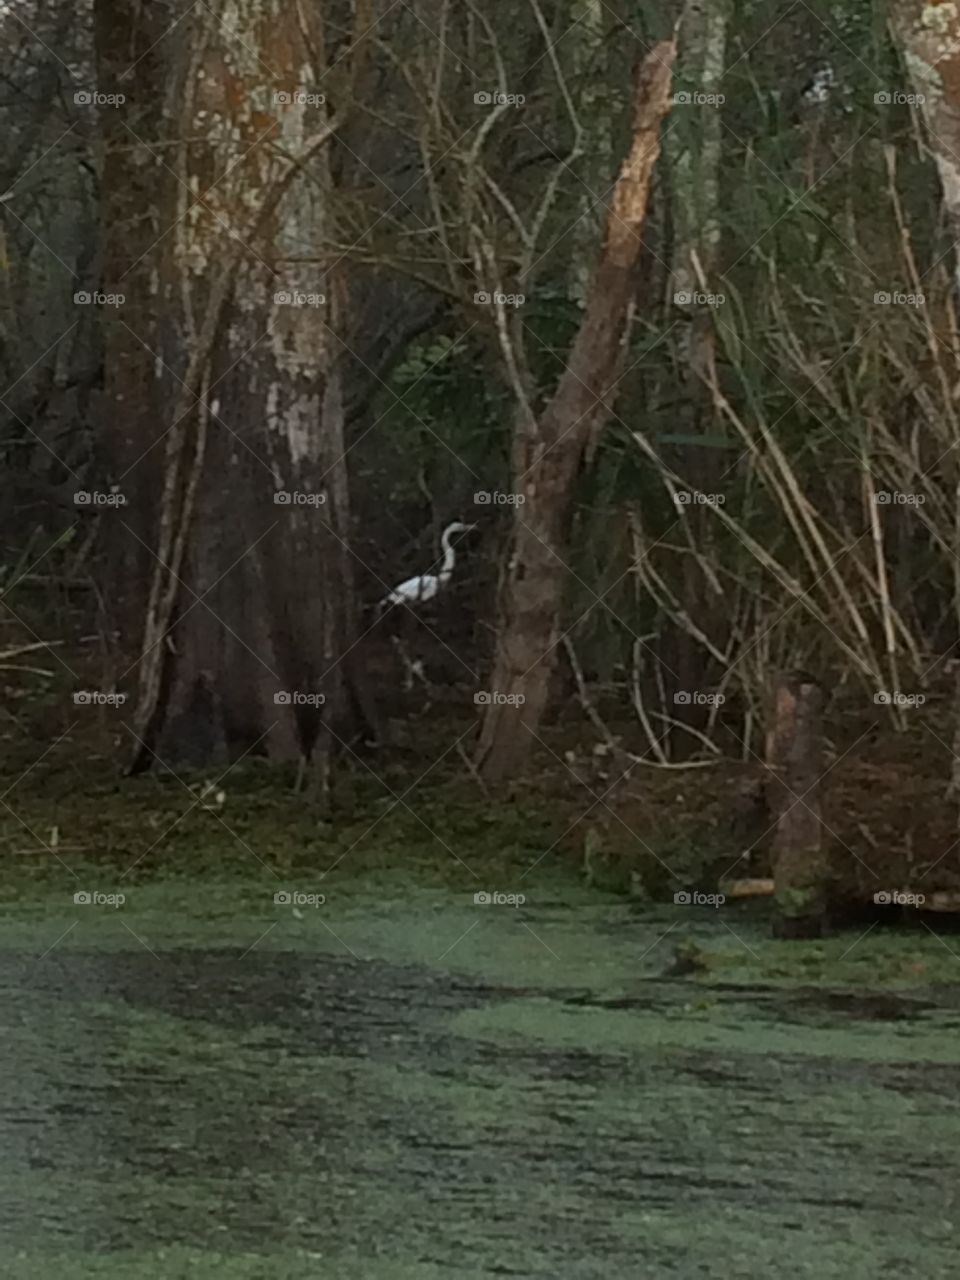 White egret in swamp